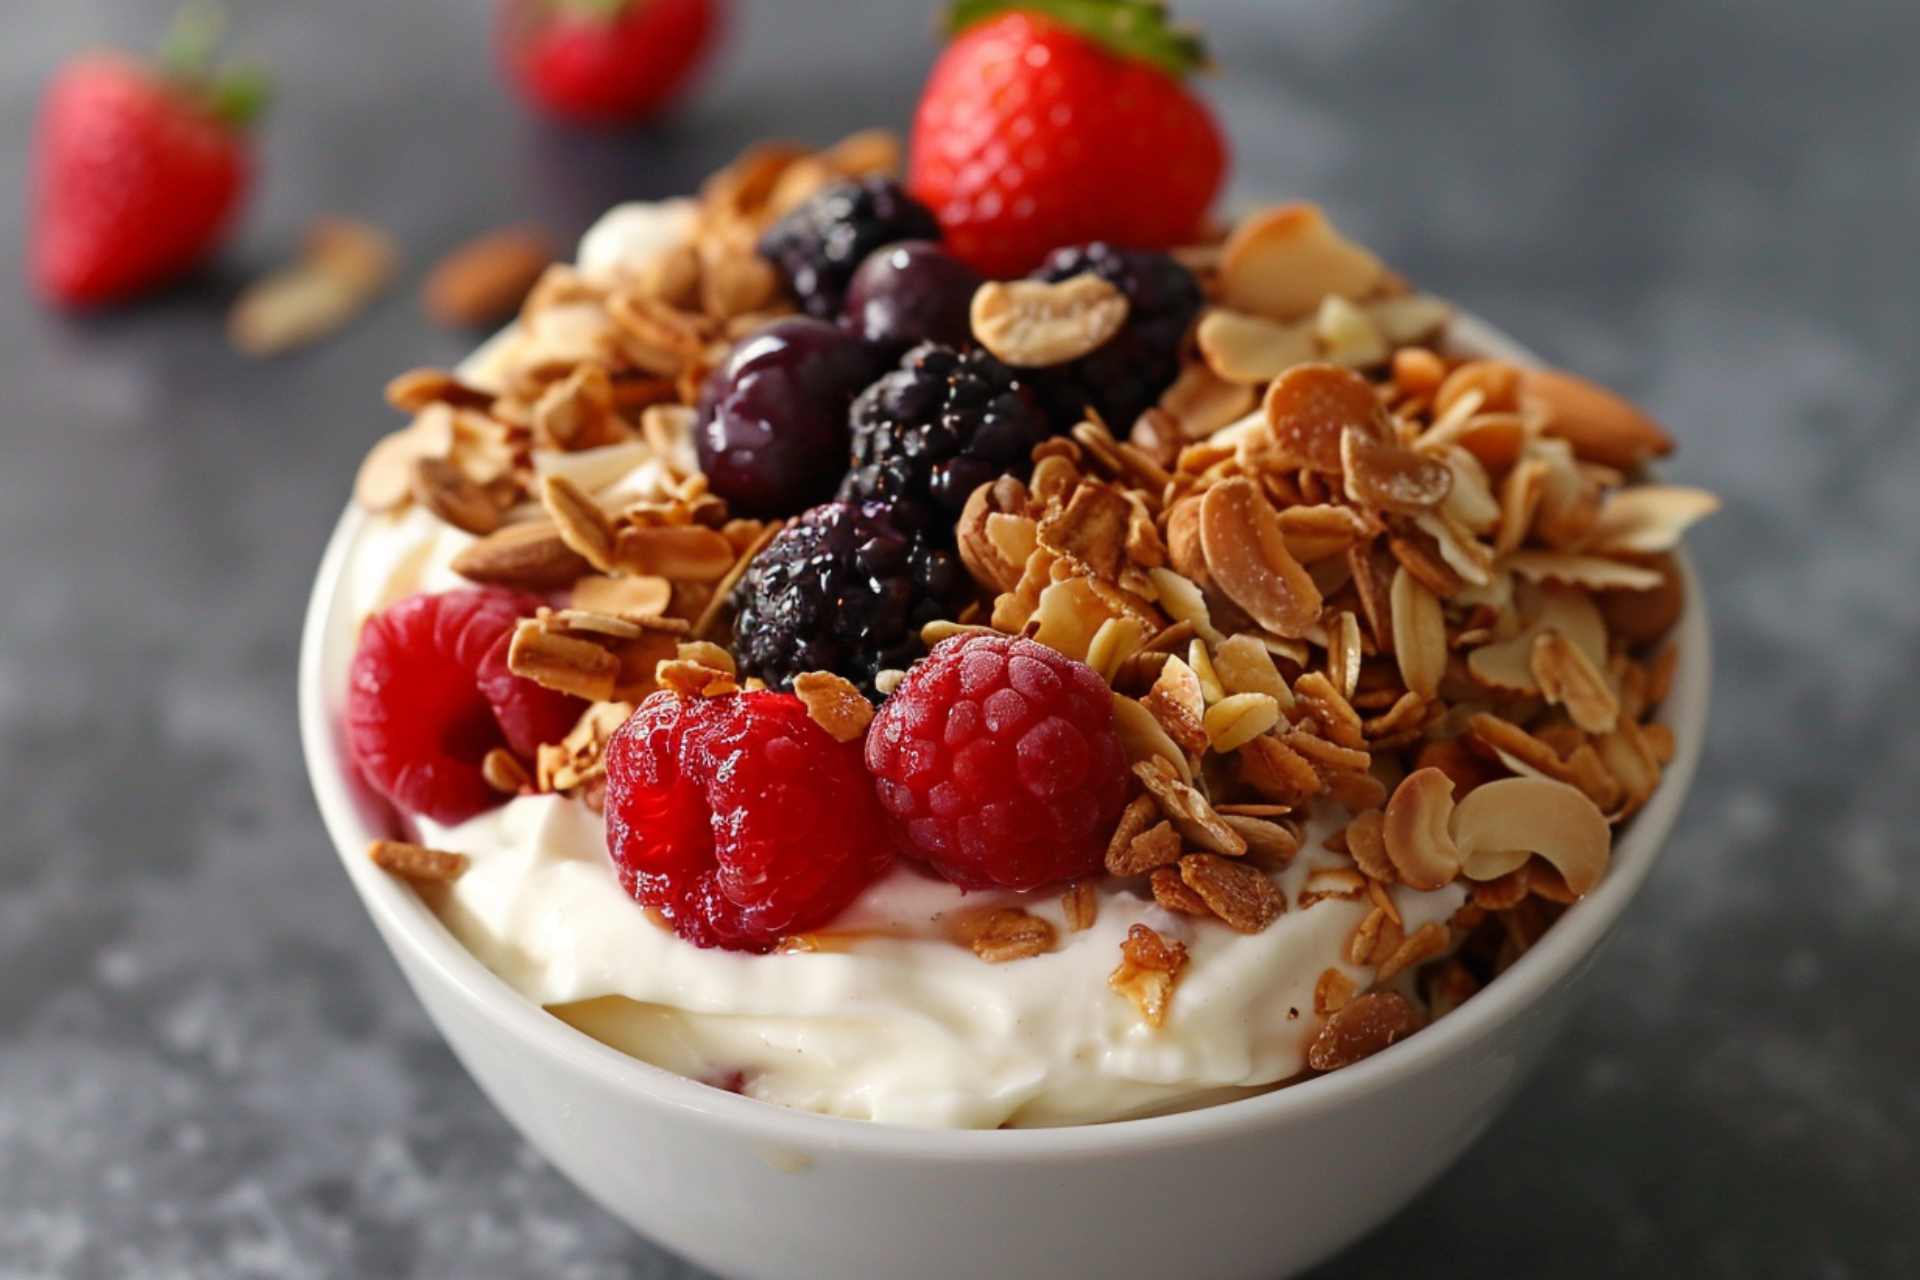 Greek Yogurt Parfait with Berries and Almonds